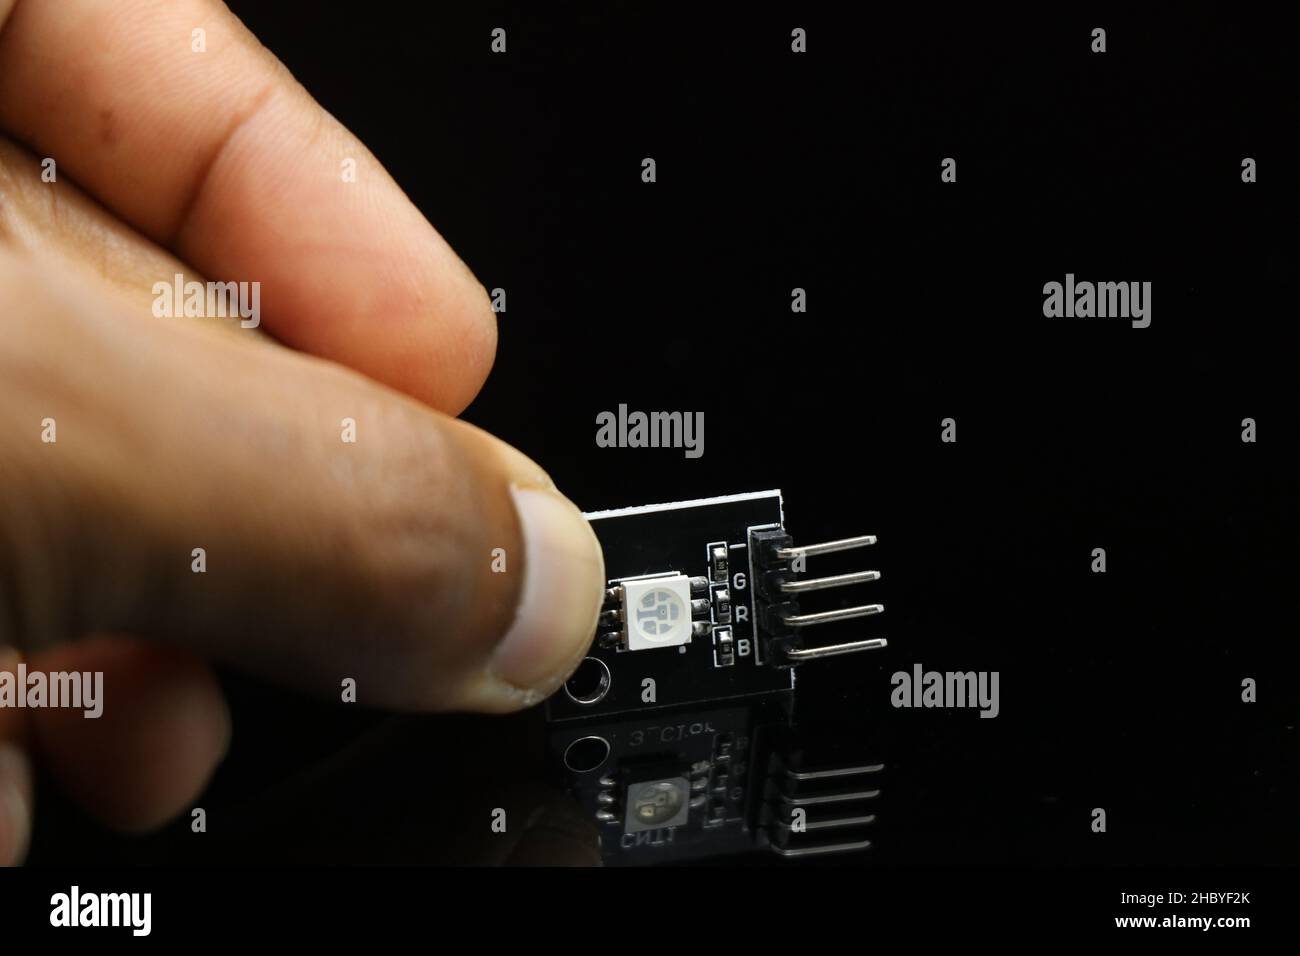 Smd led -Fotos und -Bildmaterial in hoher Auflösung – Alamy